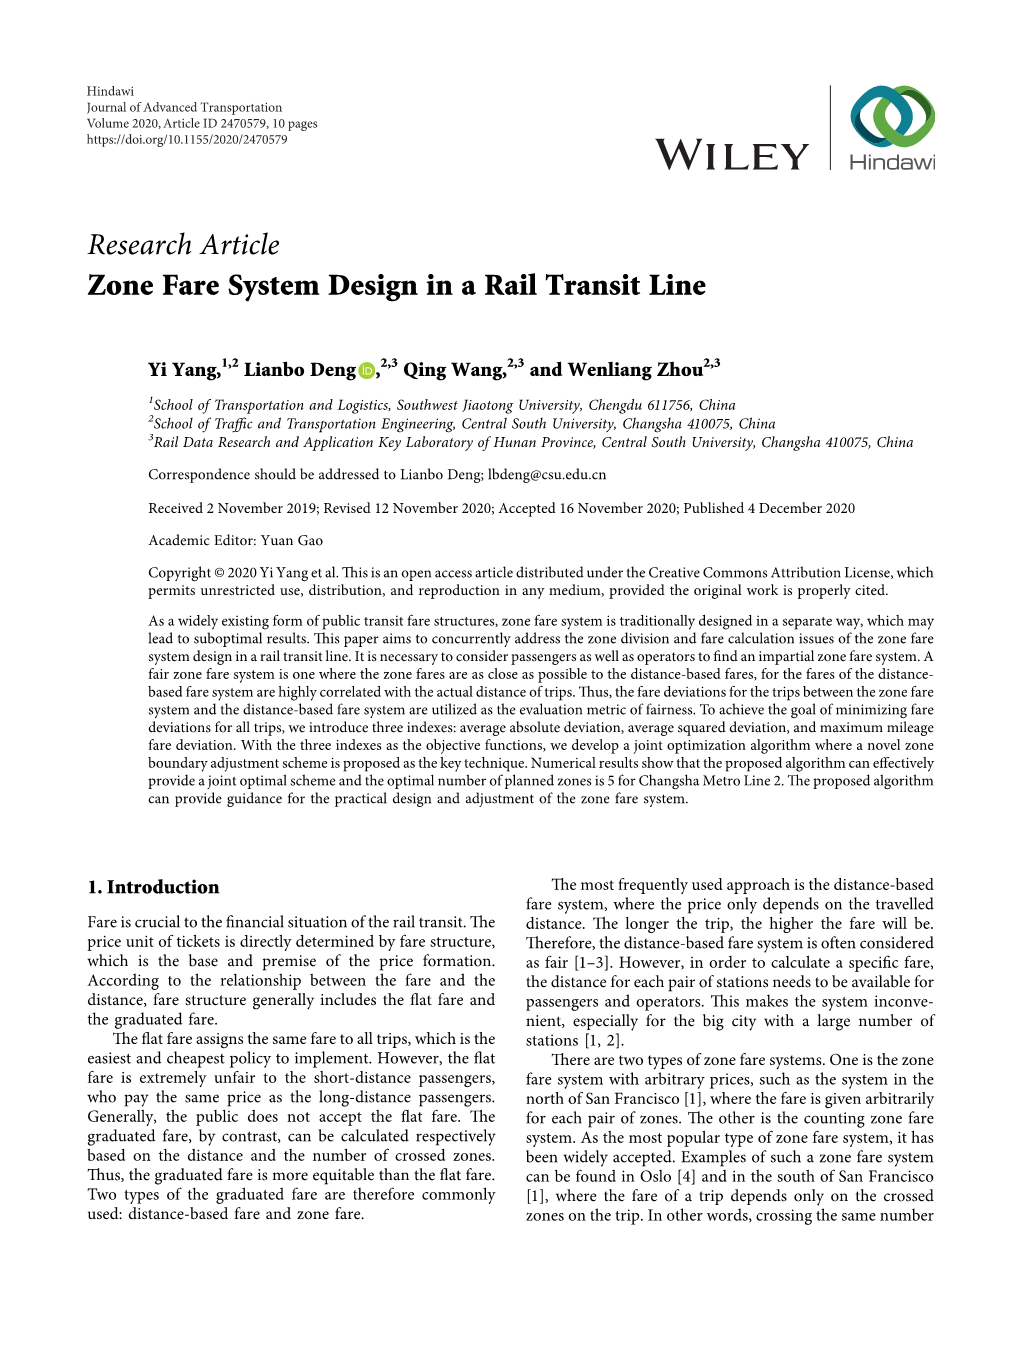 Research Article Zone Fare System Design in a Rail Transit Line